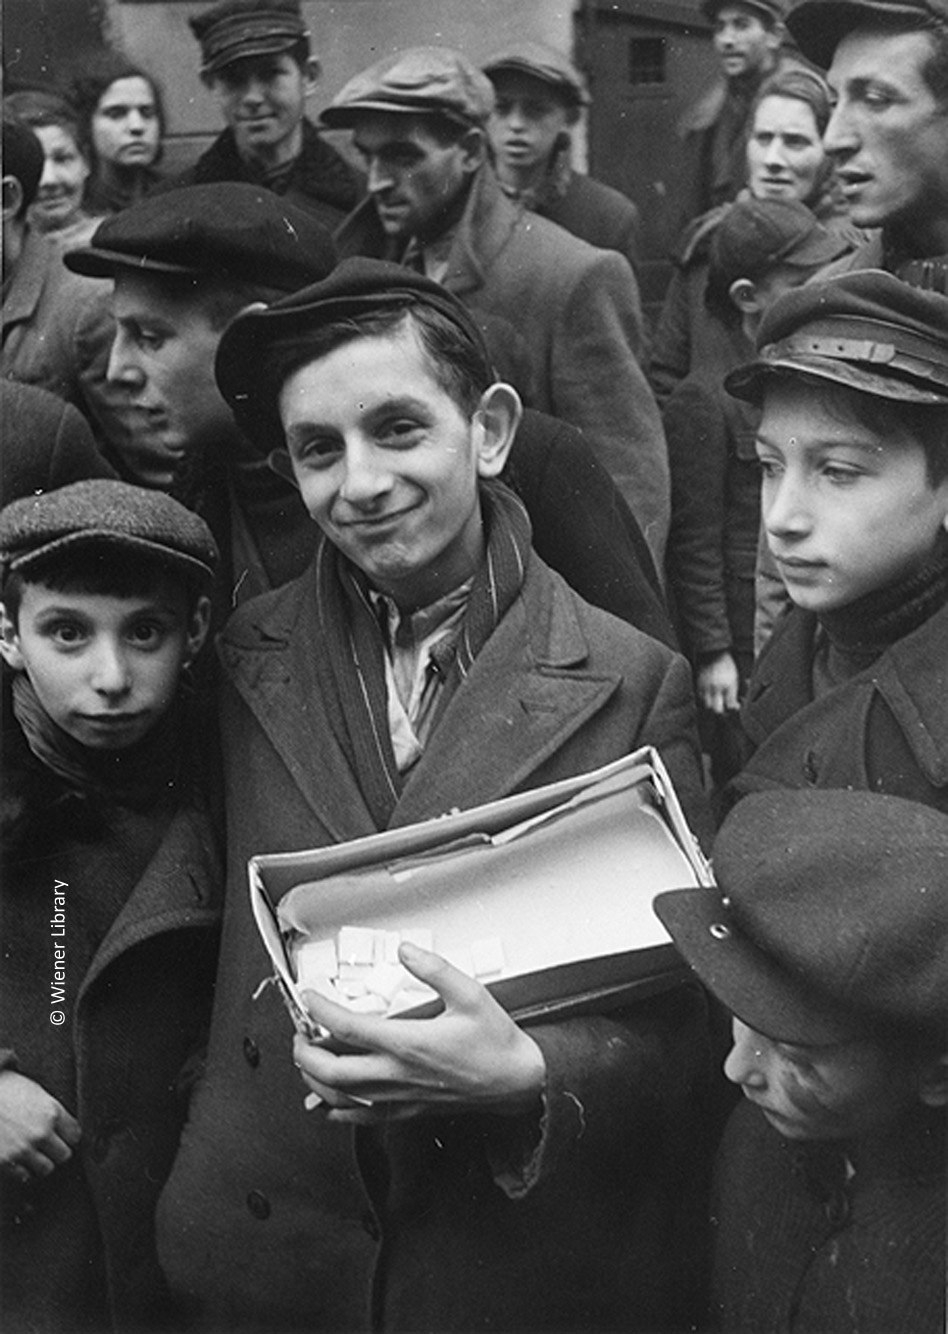 Boys in the Warsaw Ghetto